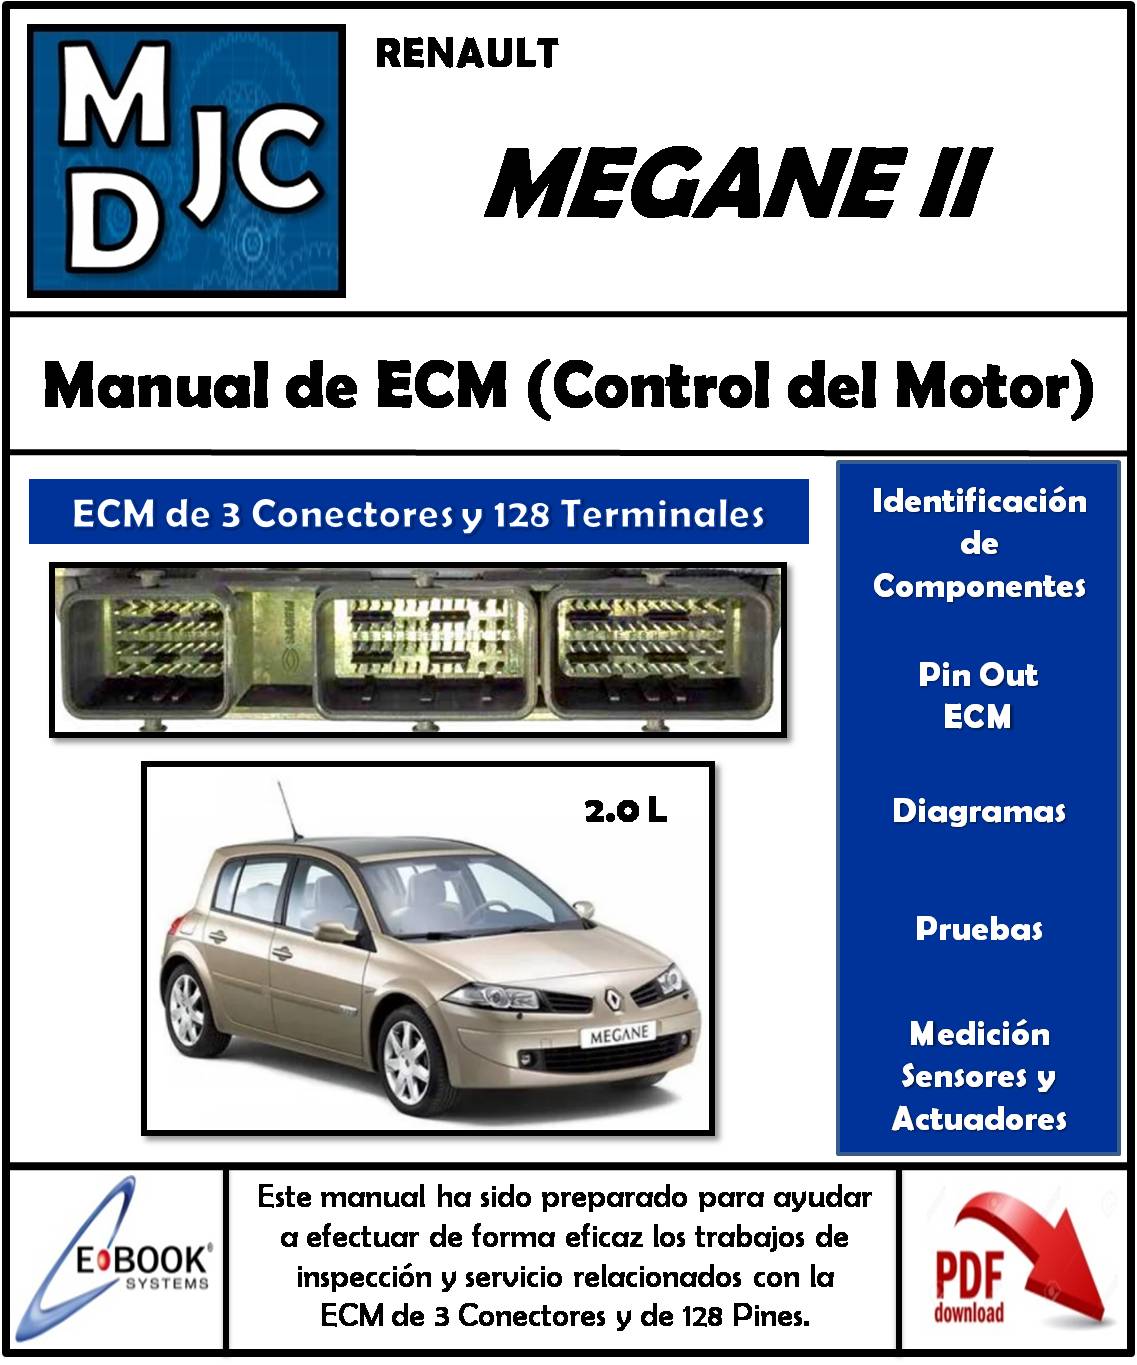 Renault Megane II (2.0L) / ECM 128 Terminales